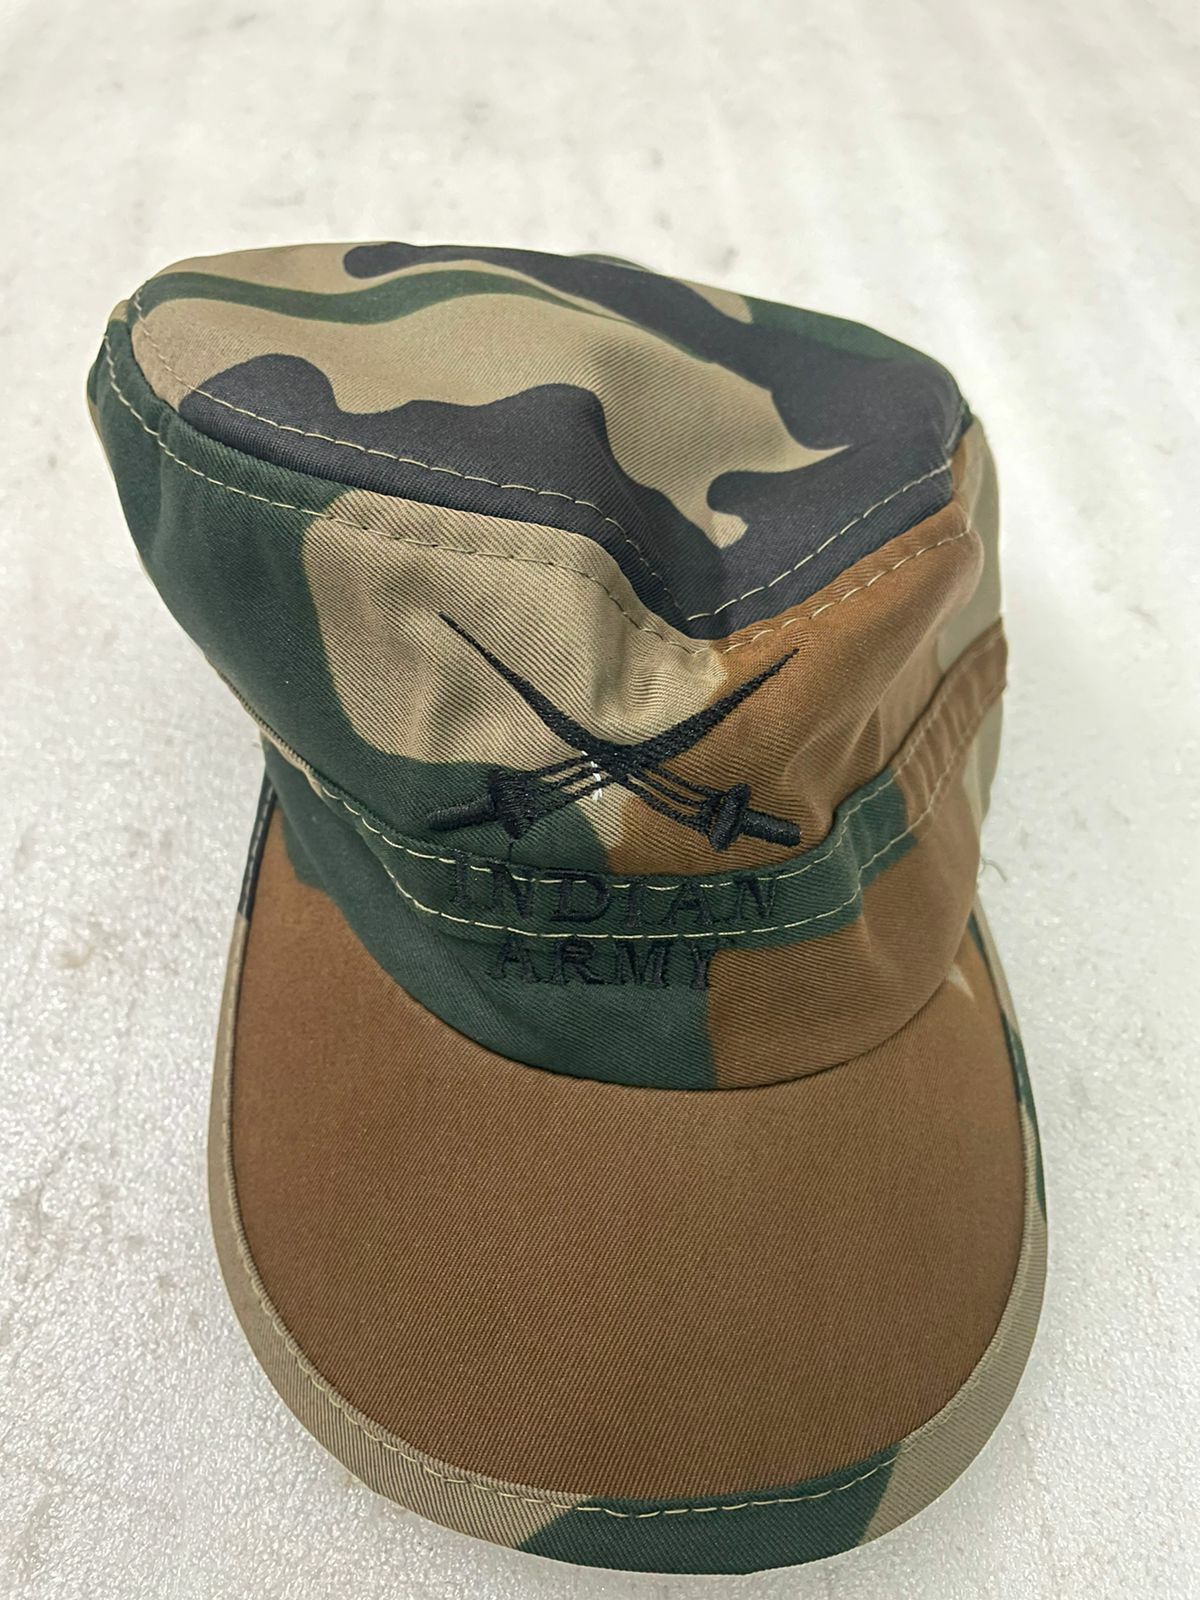 Antique Army Hat India Militaria Cap Vintage Old Rare Collectible